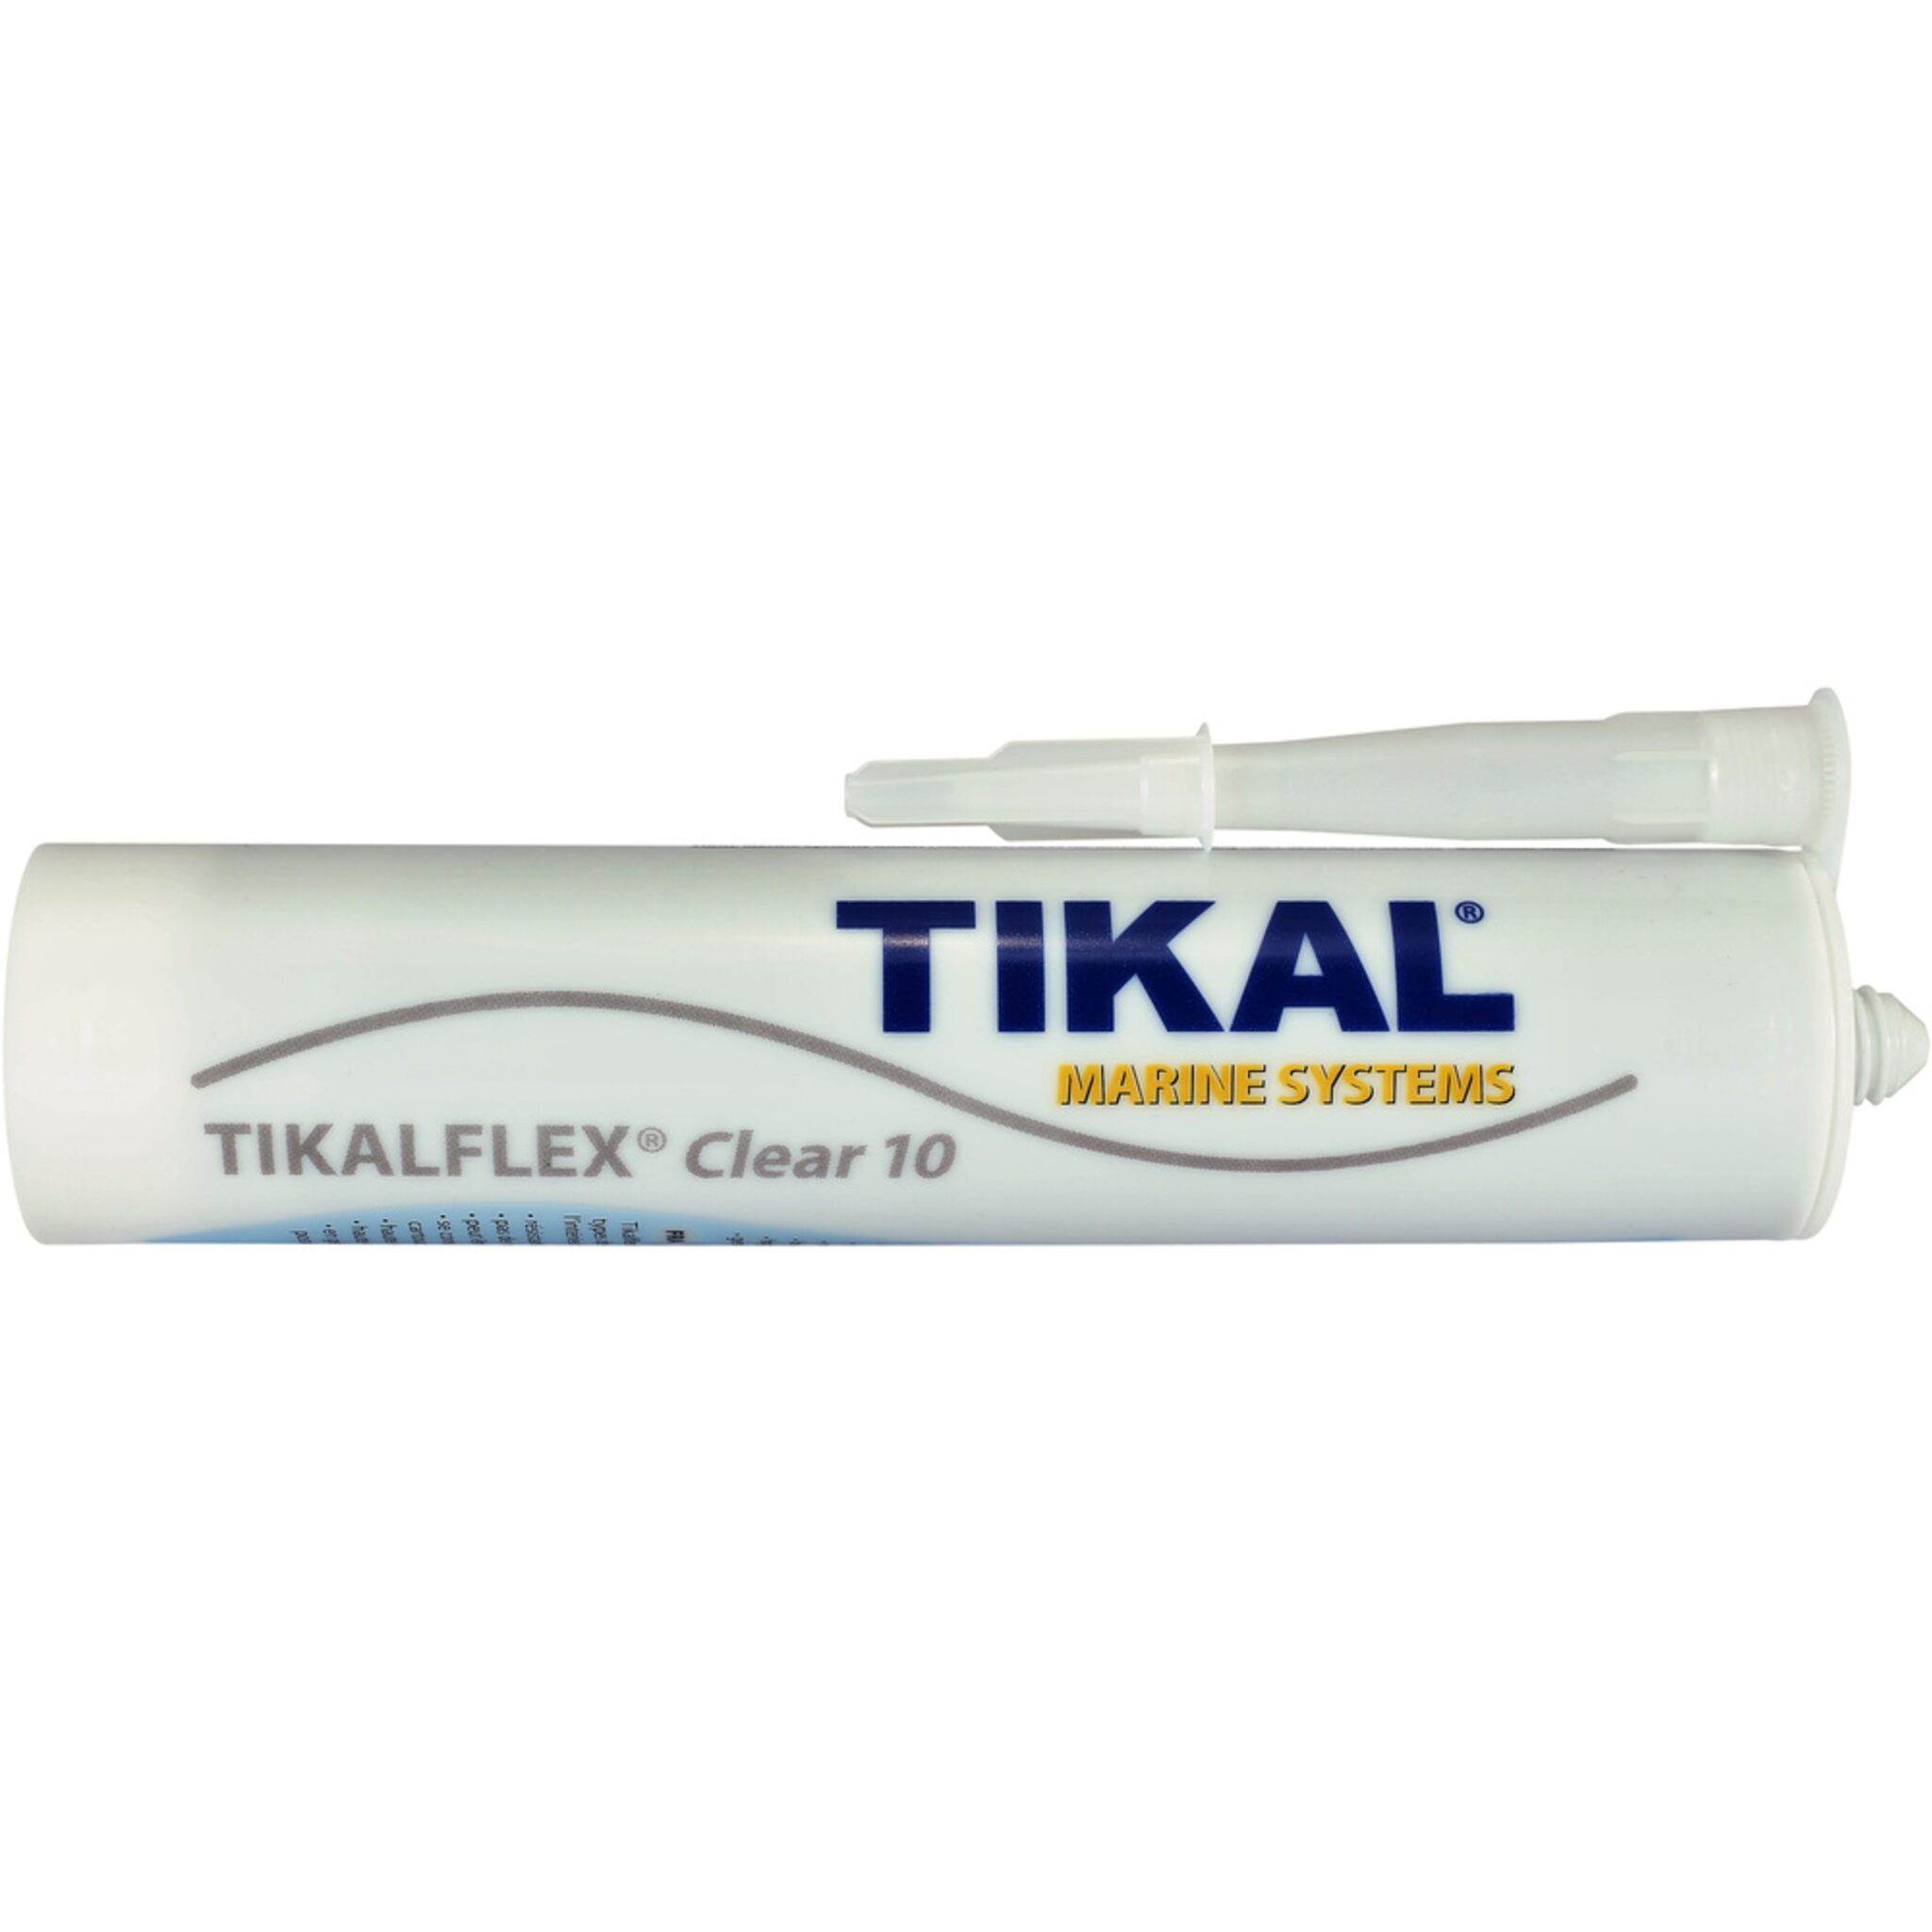 TIKALFLEX Clear 10 MS polymer adhesive